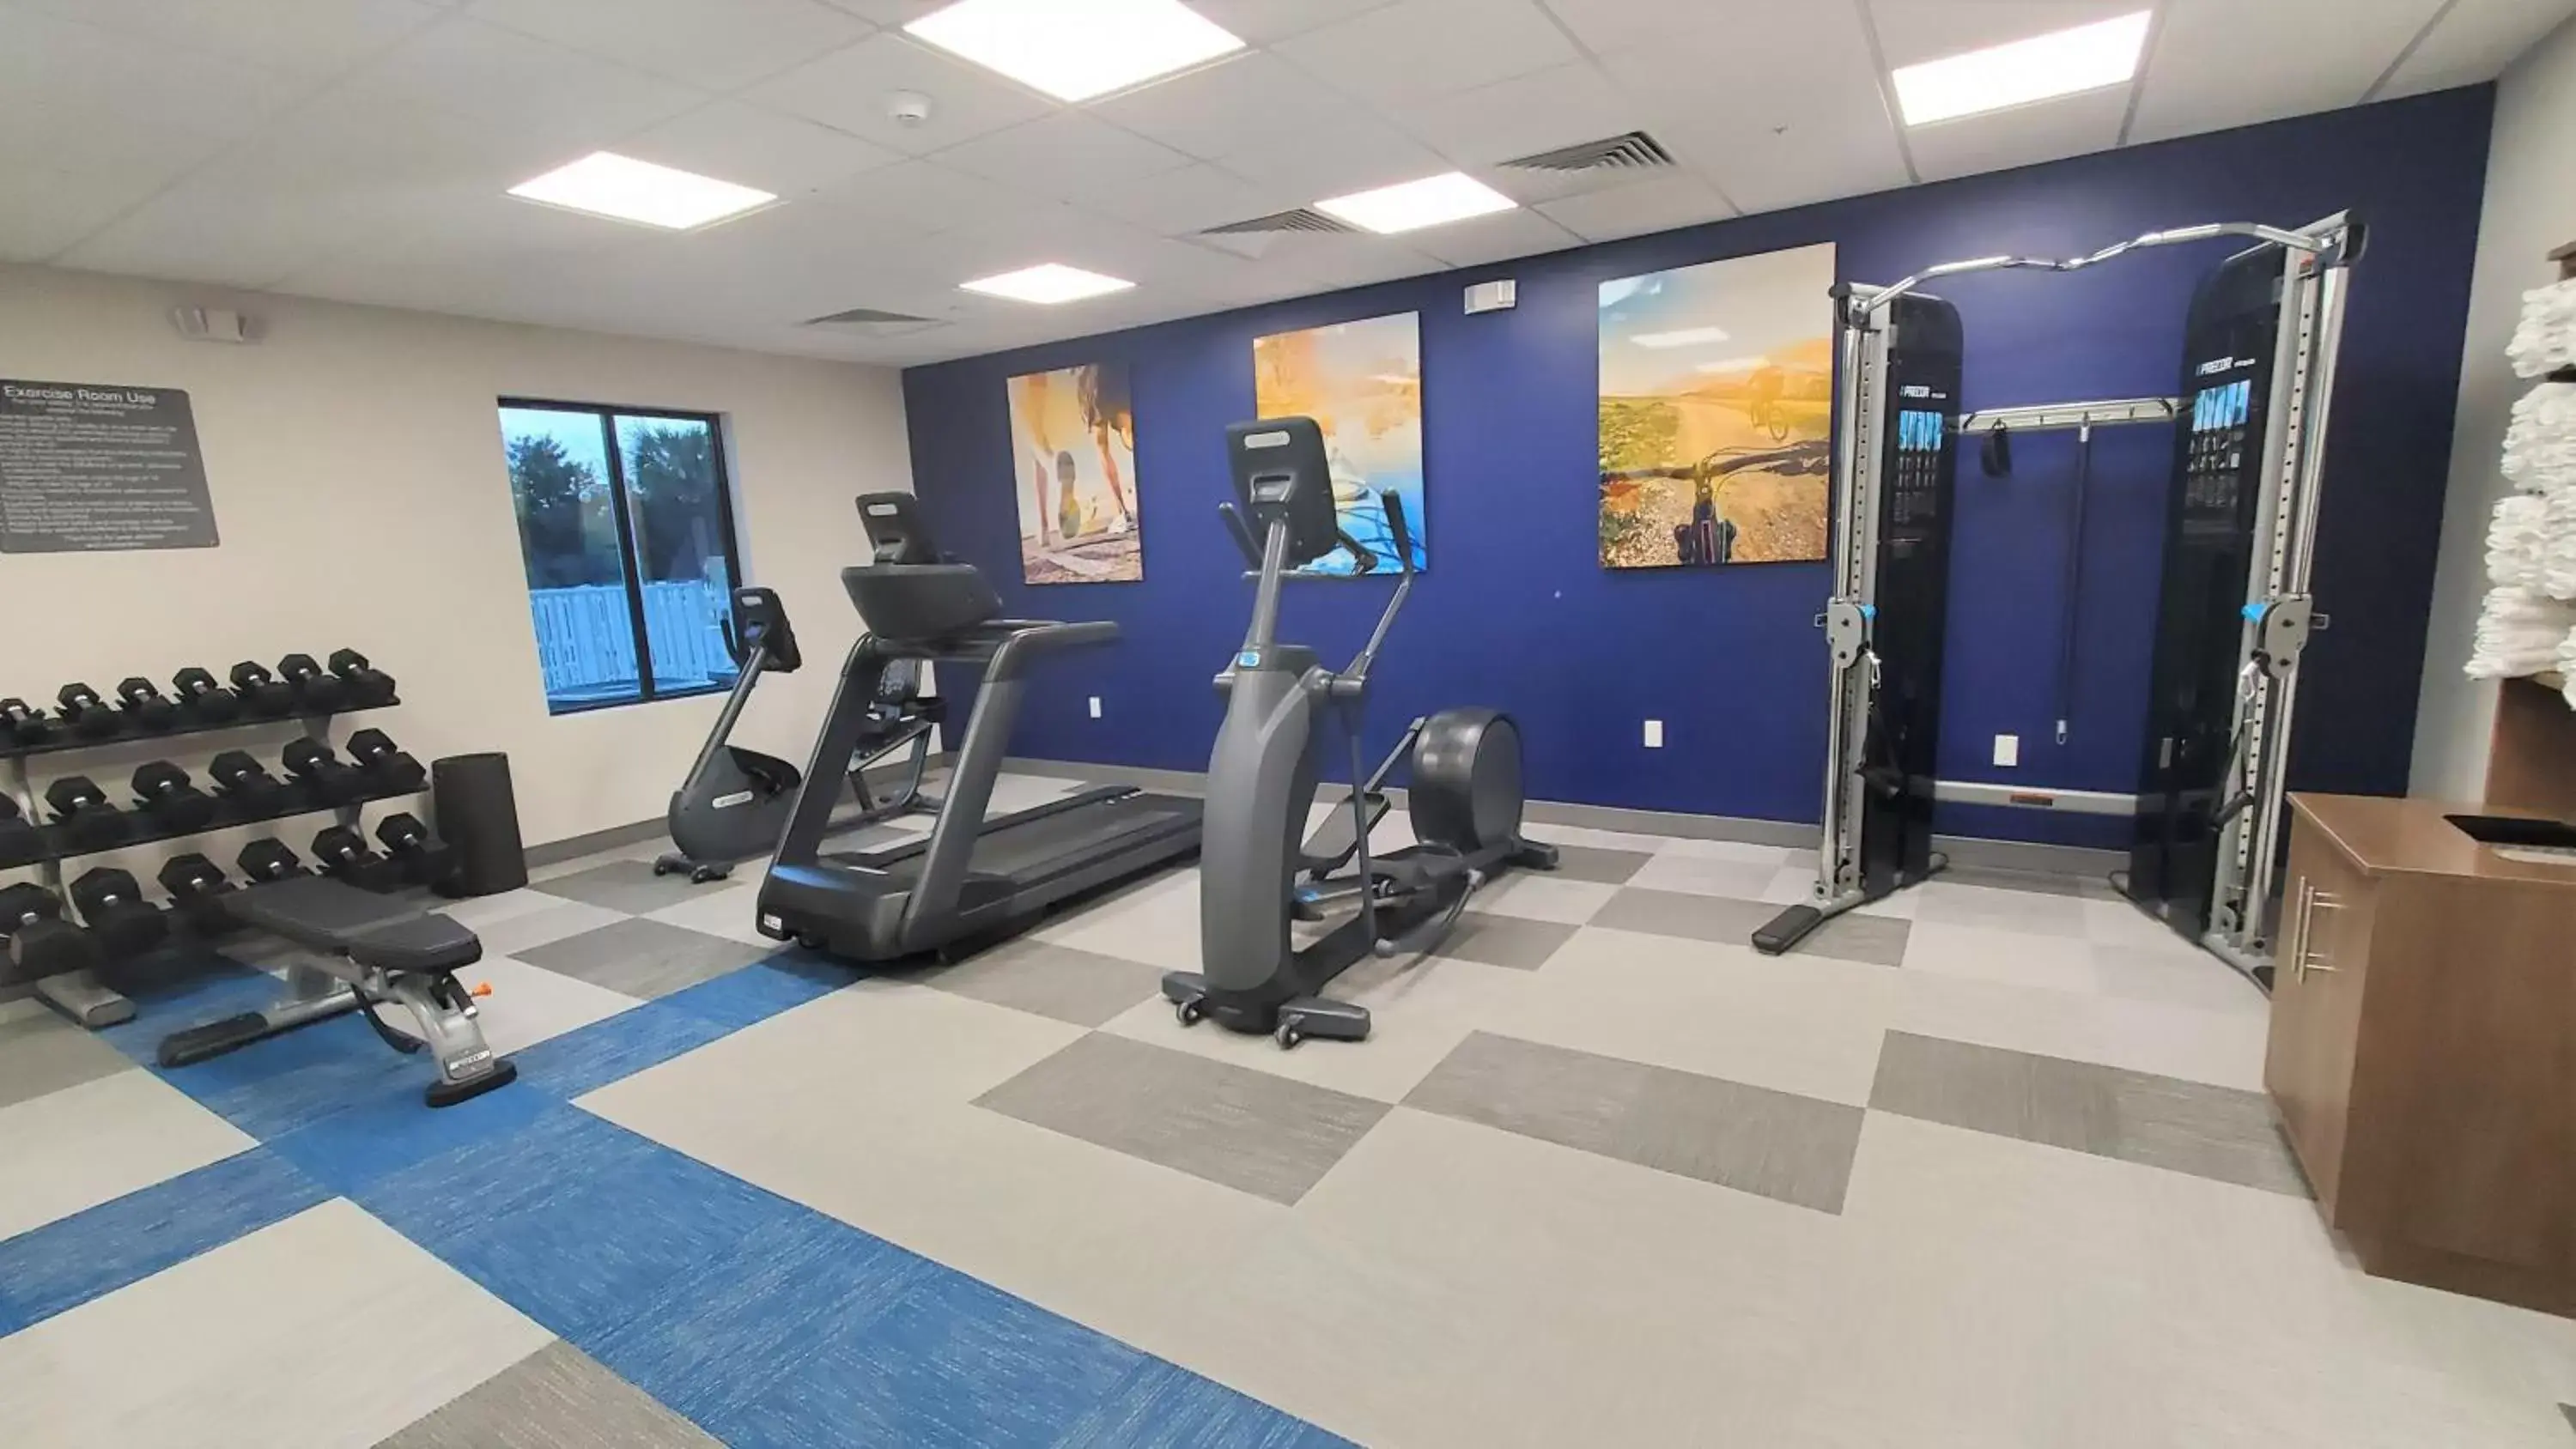 Fitness centre/facilities, Fitness Center/Facilities in Comfort Inn & Suites Panama City Beach - Pier Park Area